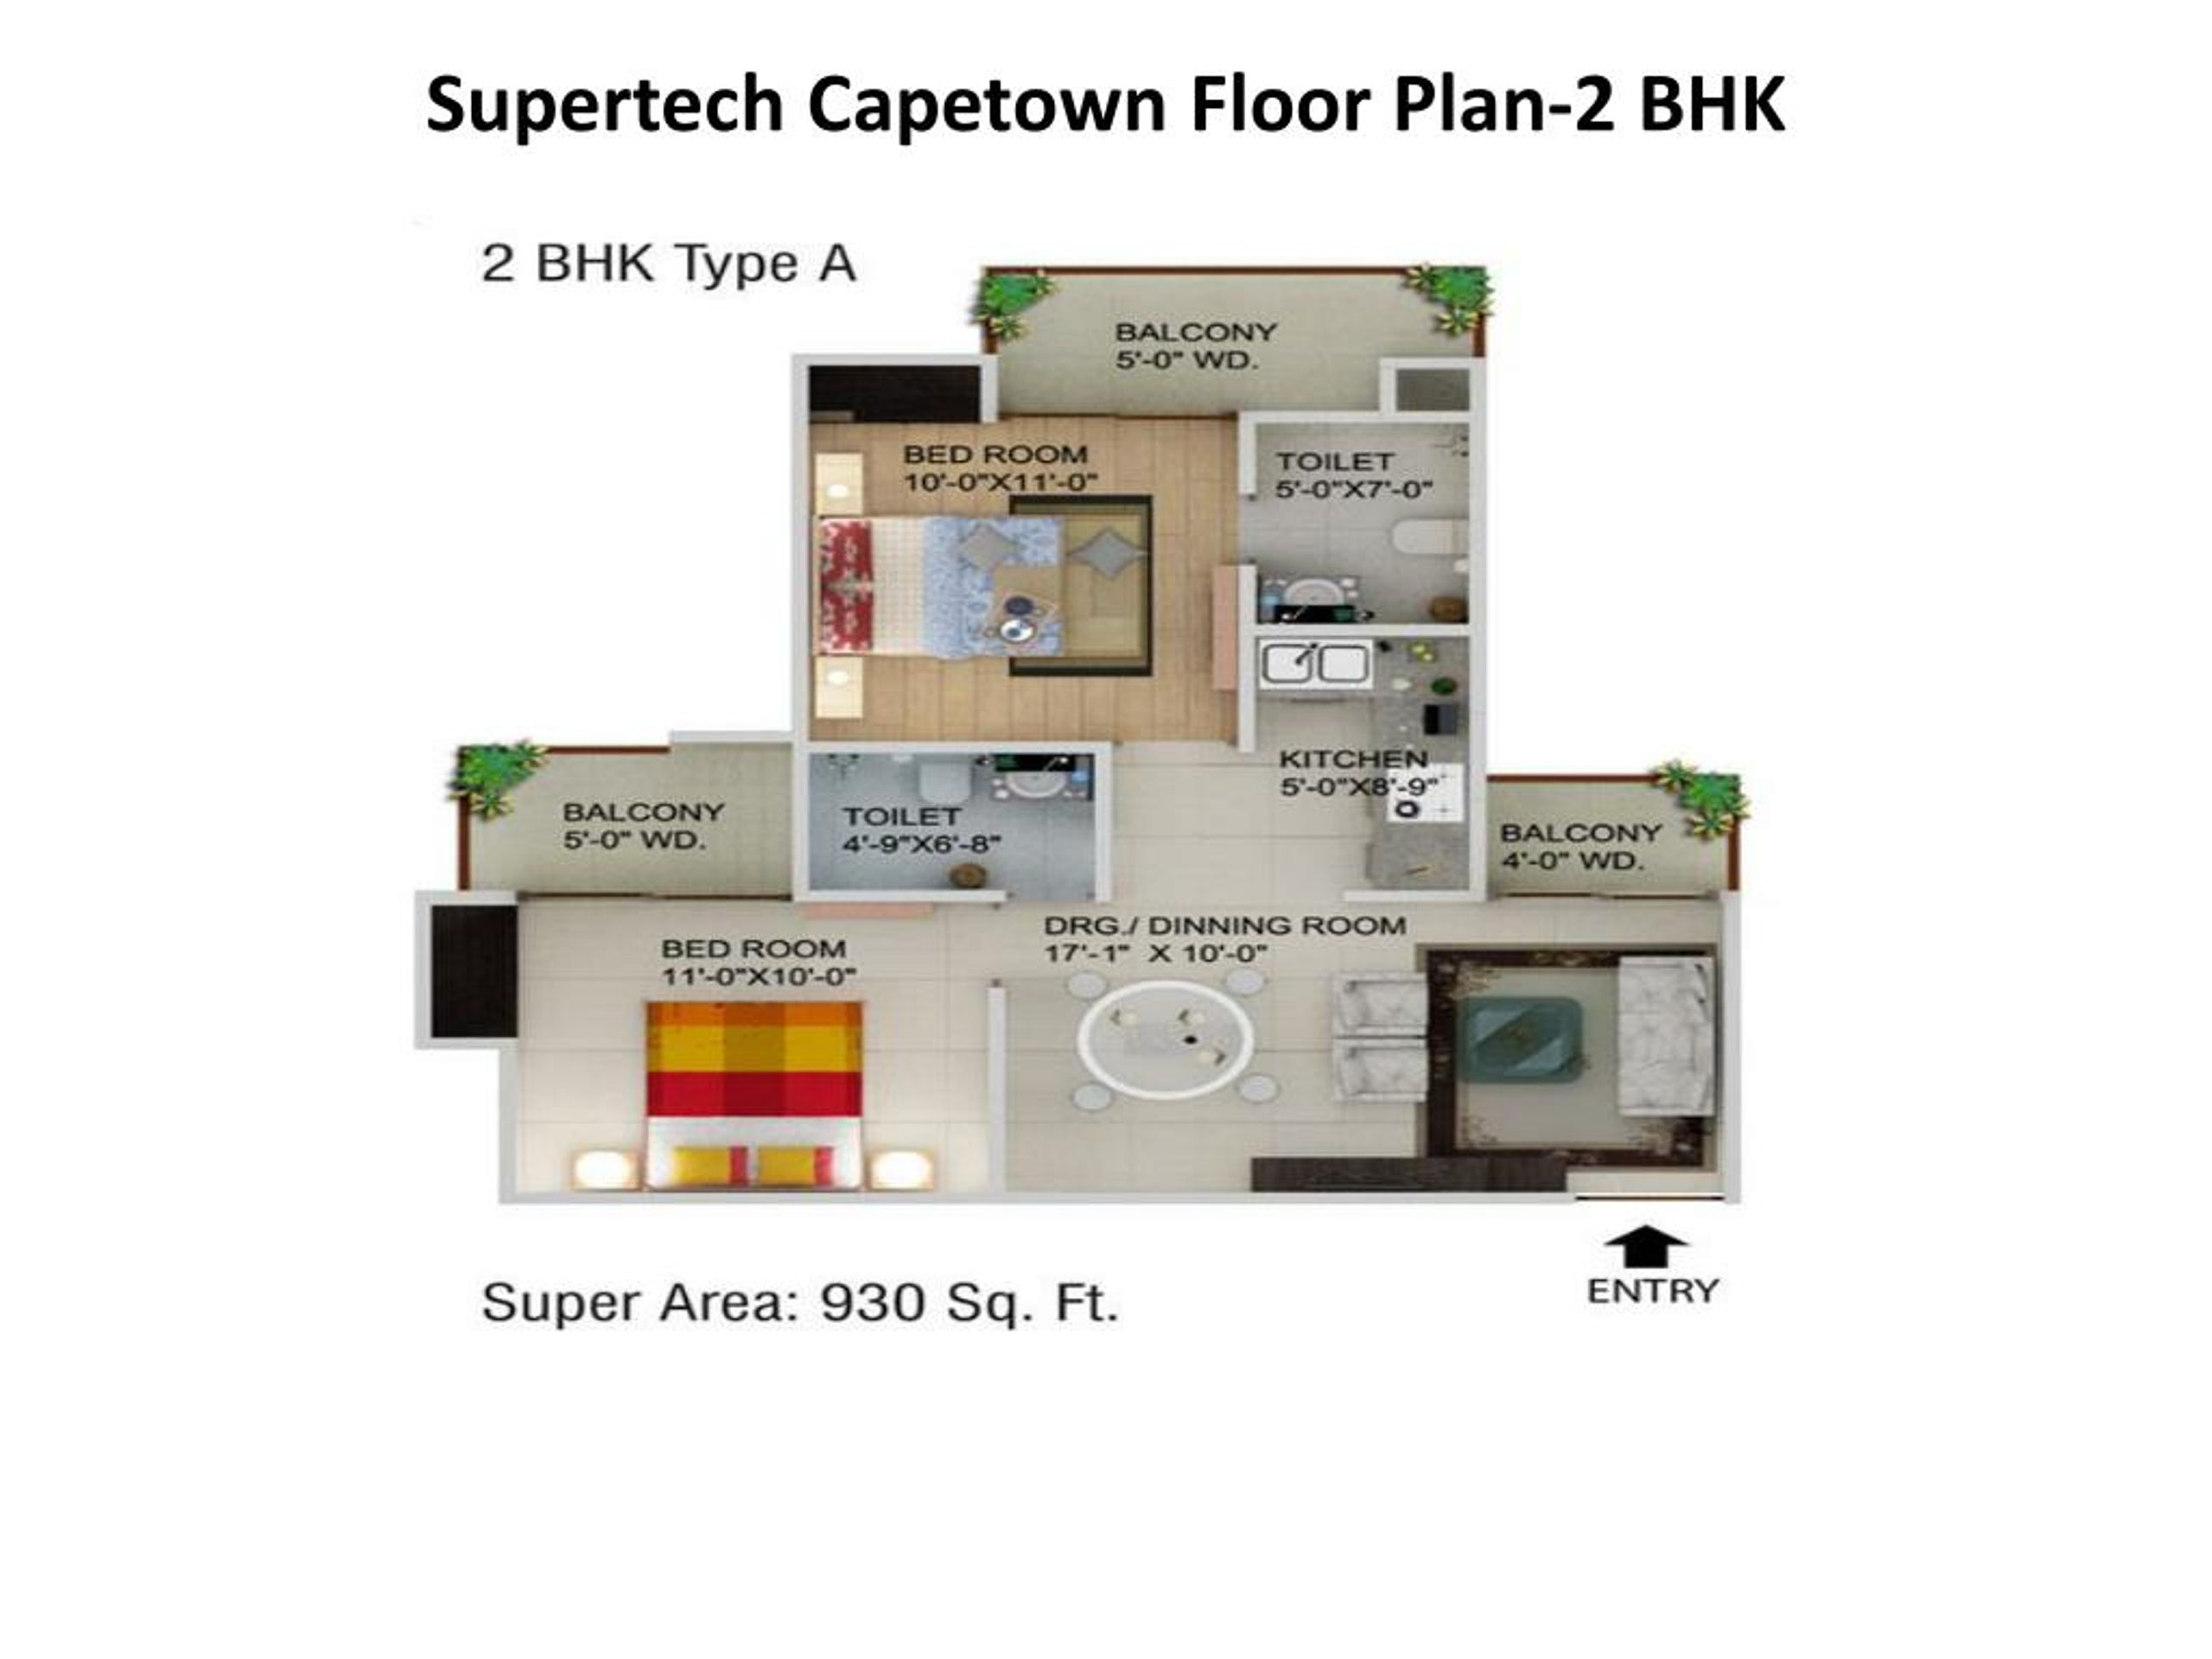 PPT - Supertech Capetown Residential Apartments PowerPoint Presentation ...